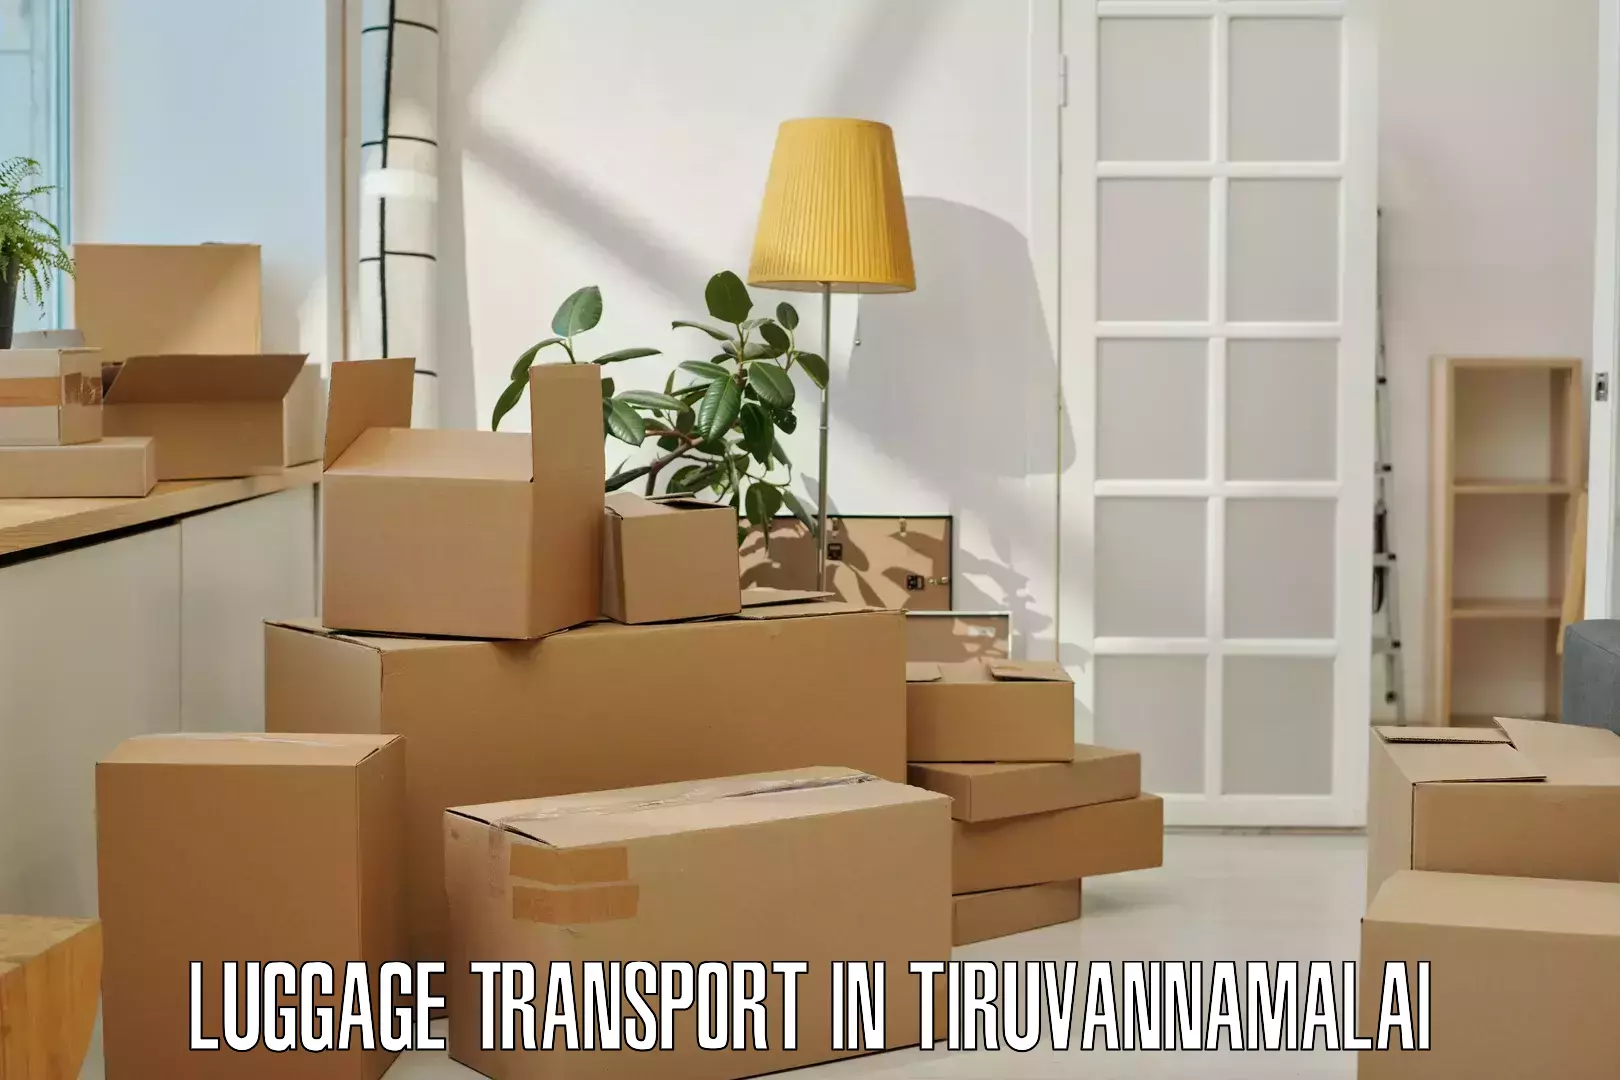 Luggage shipment processing in Tiruvannamalai